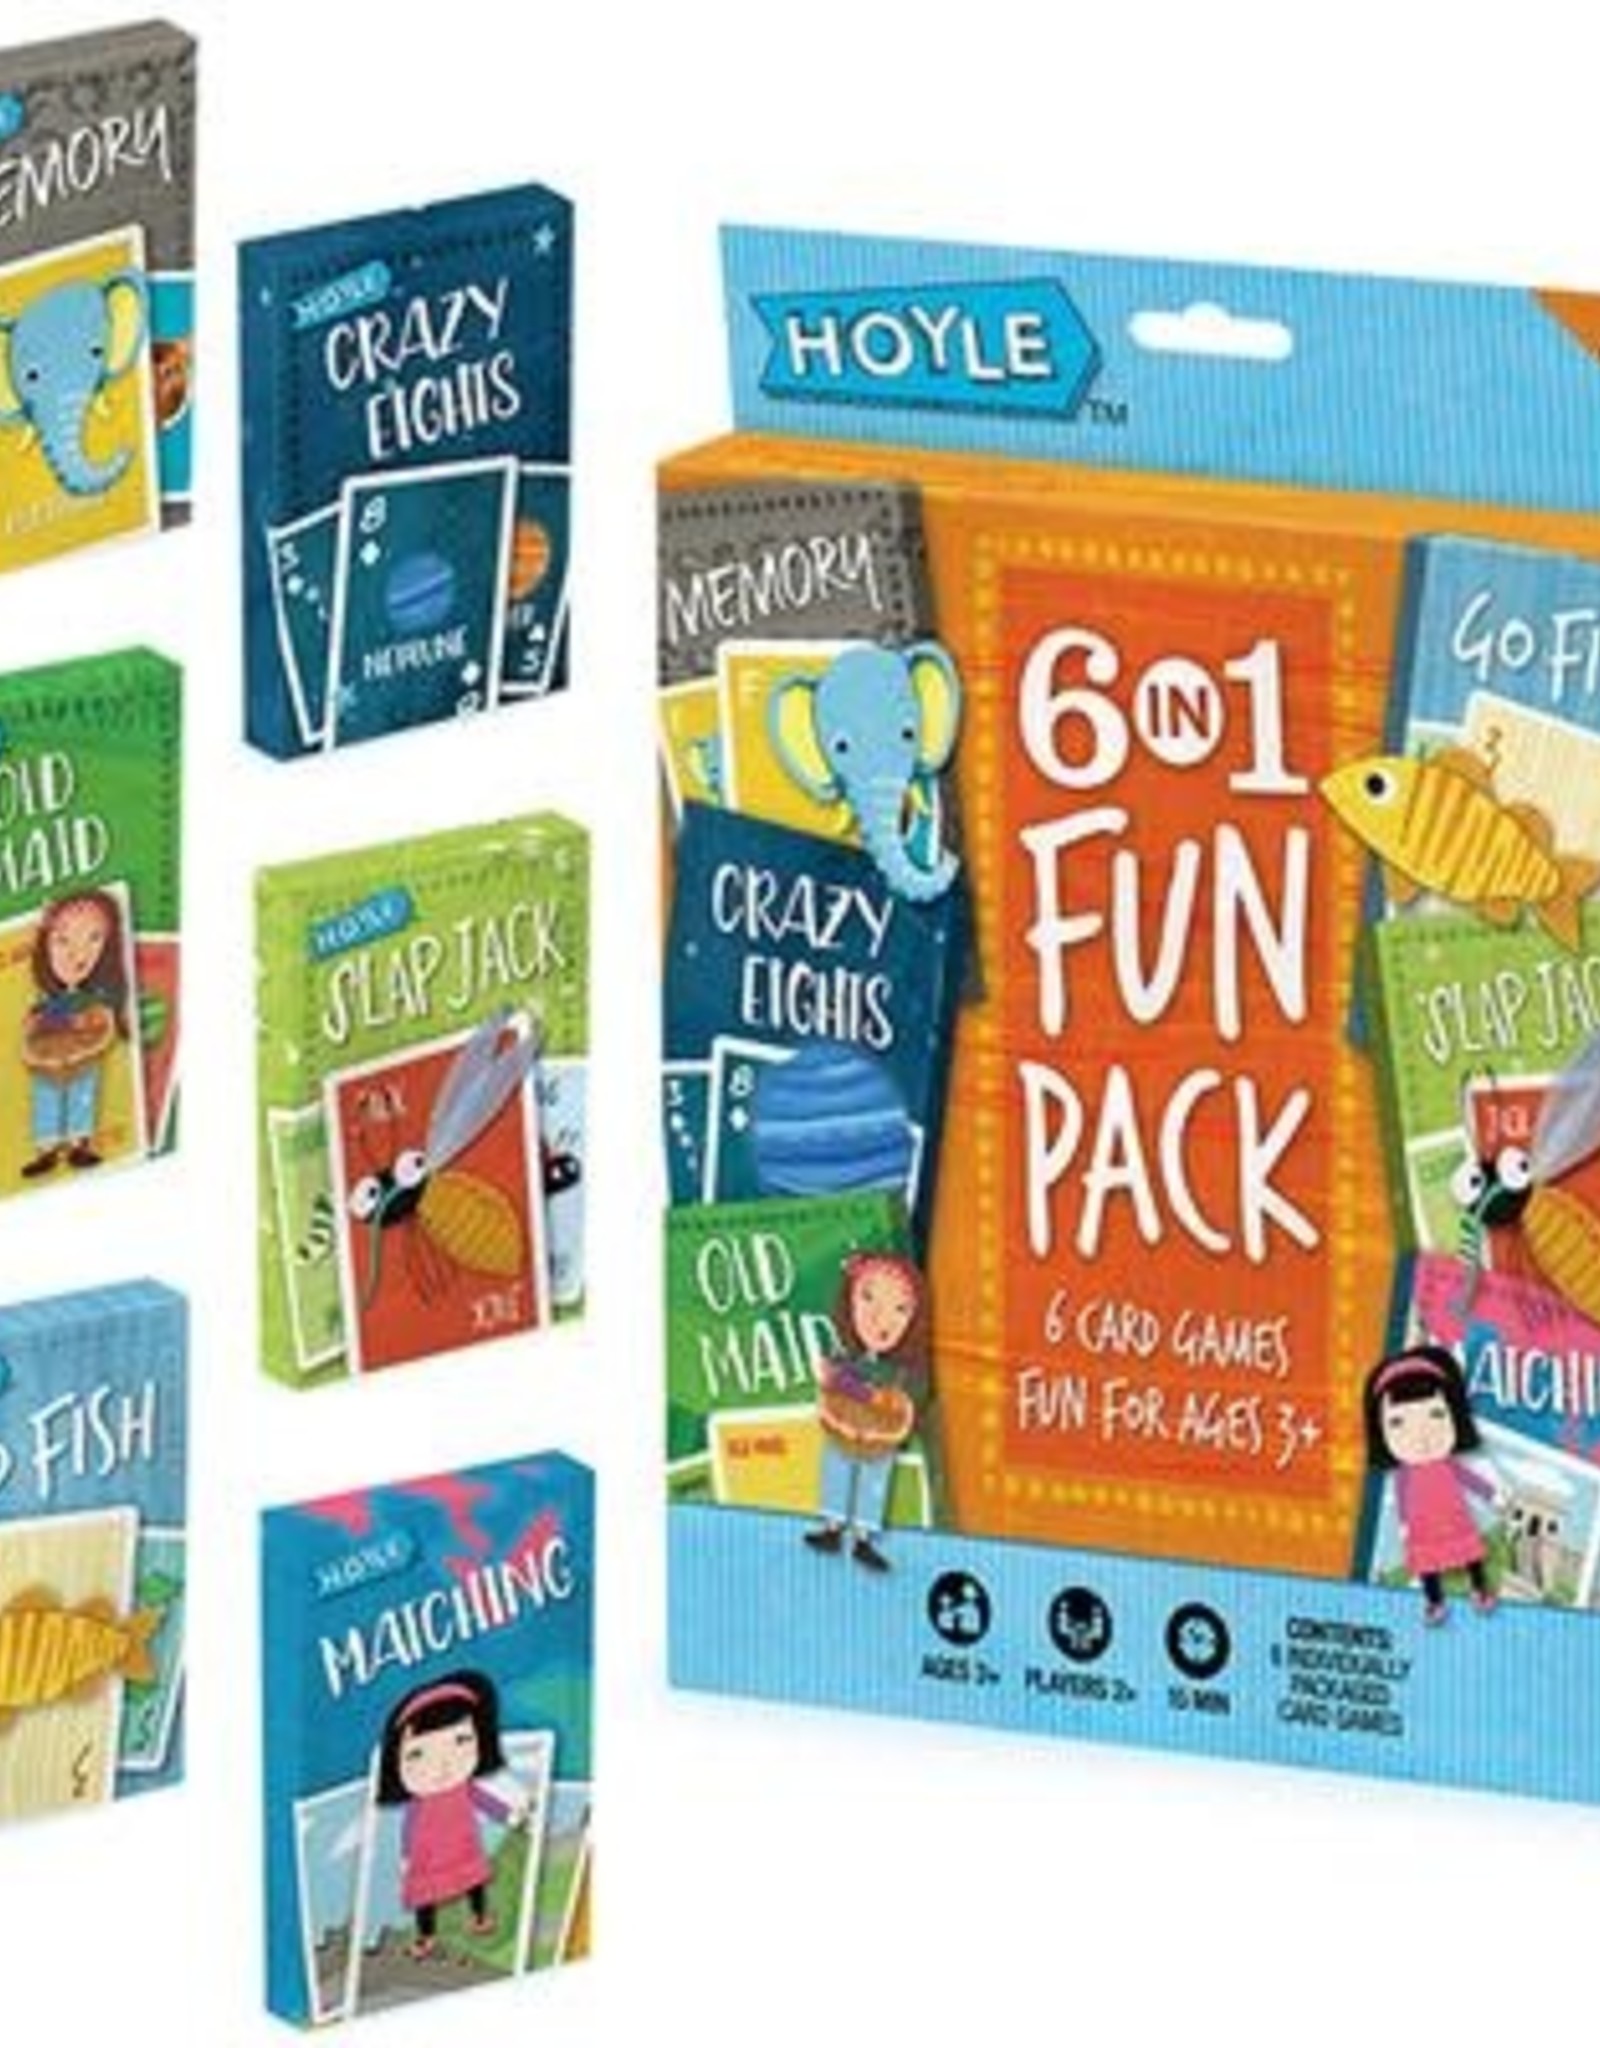 Hoyle Hoyle 6-in-1 Fun Pack